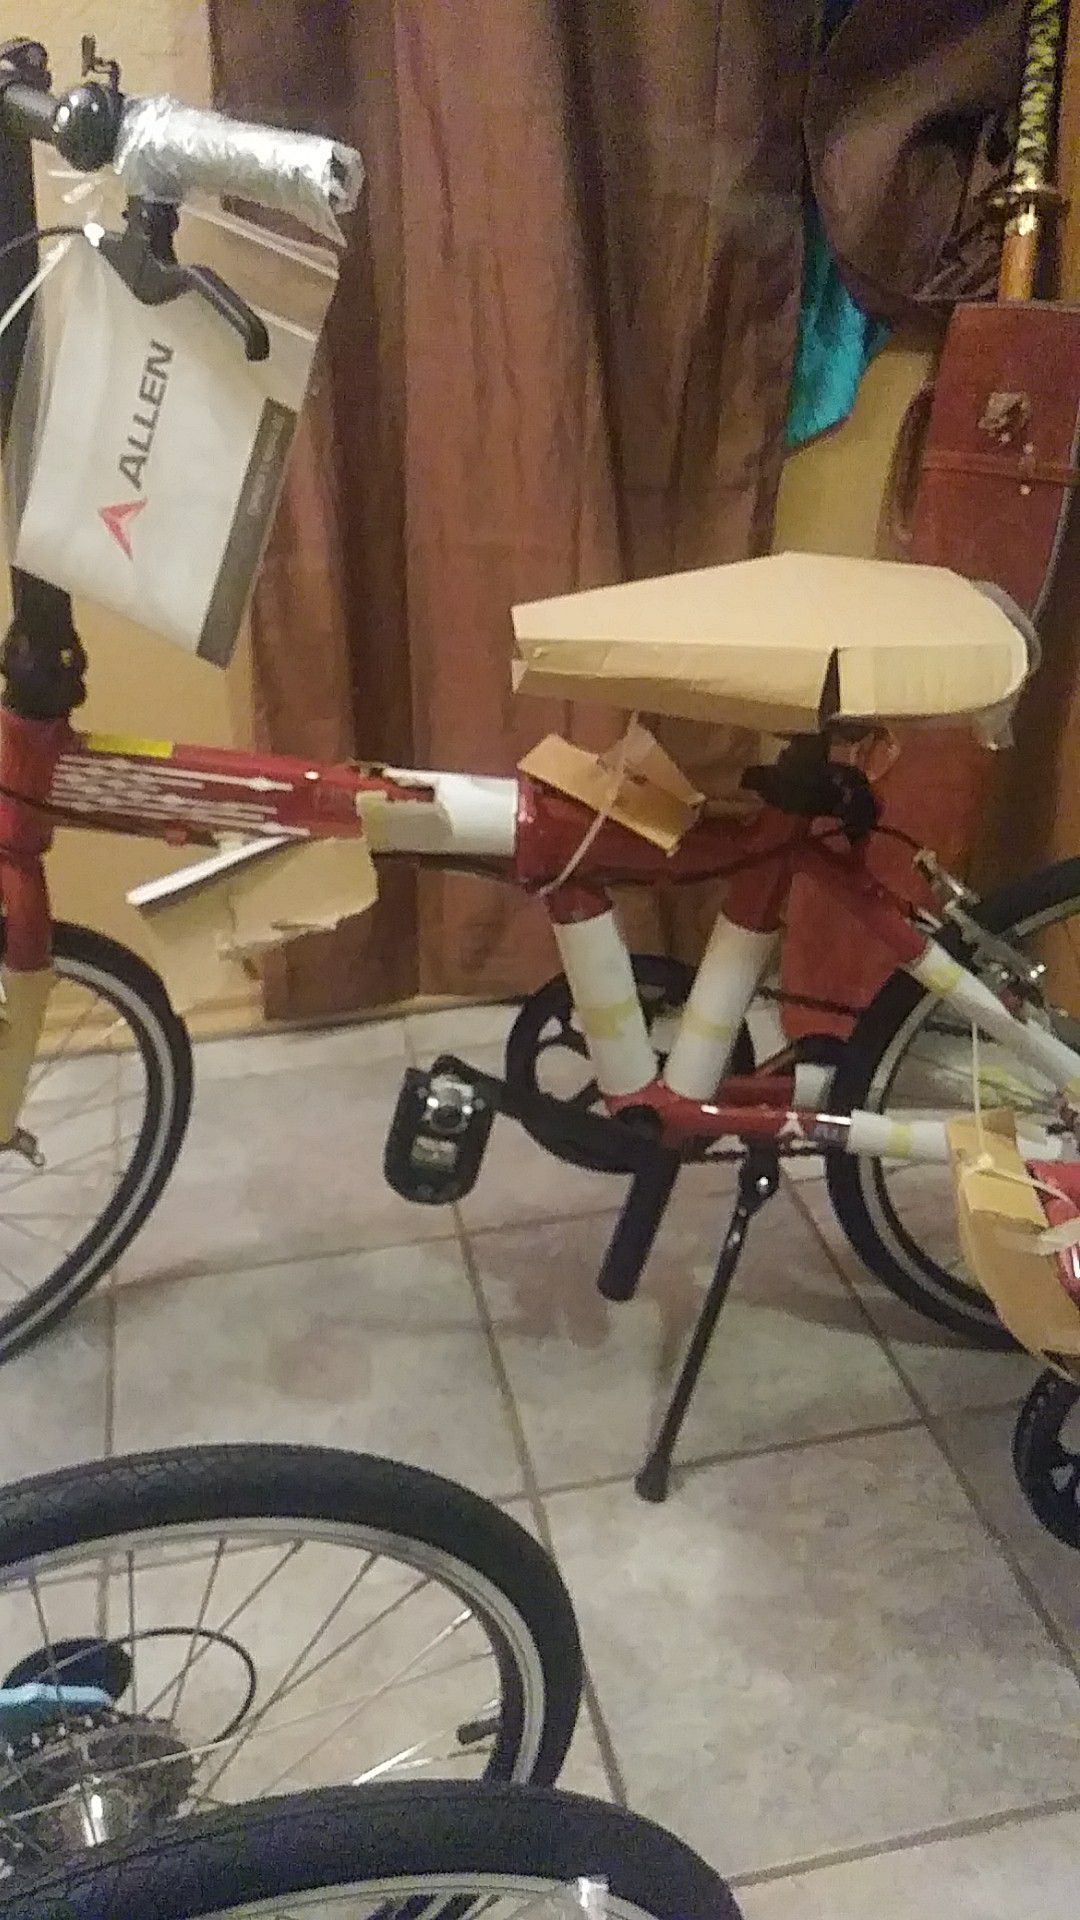 Allen sports folding bikes